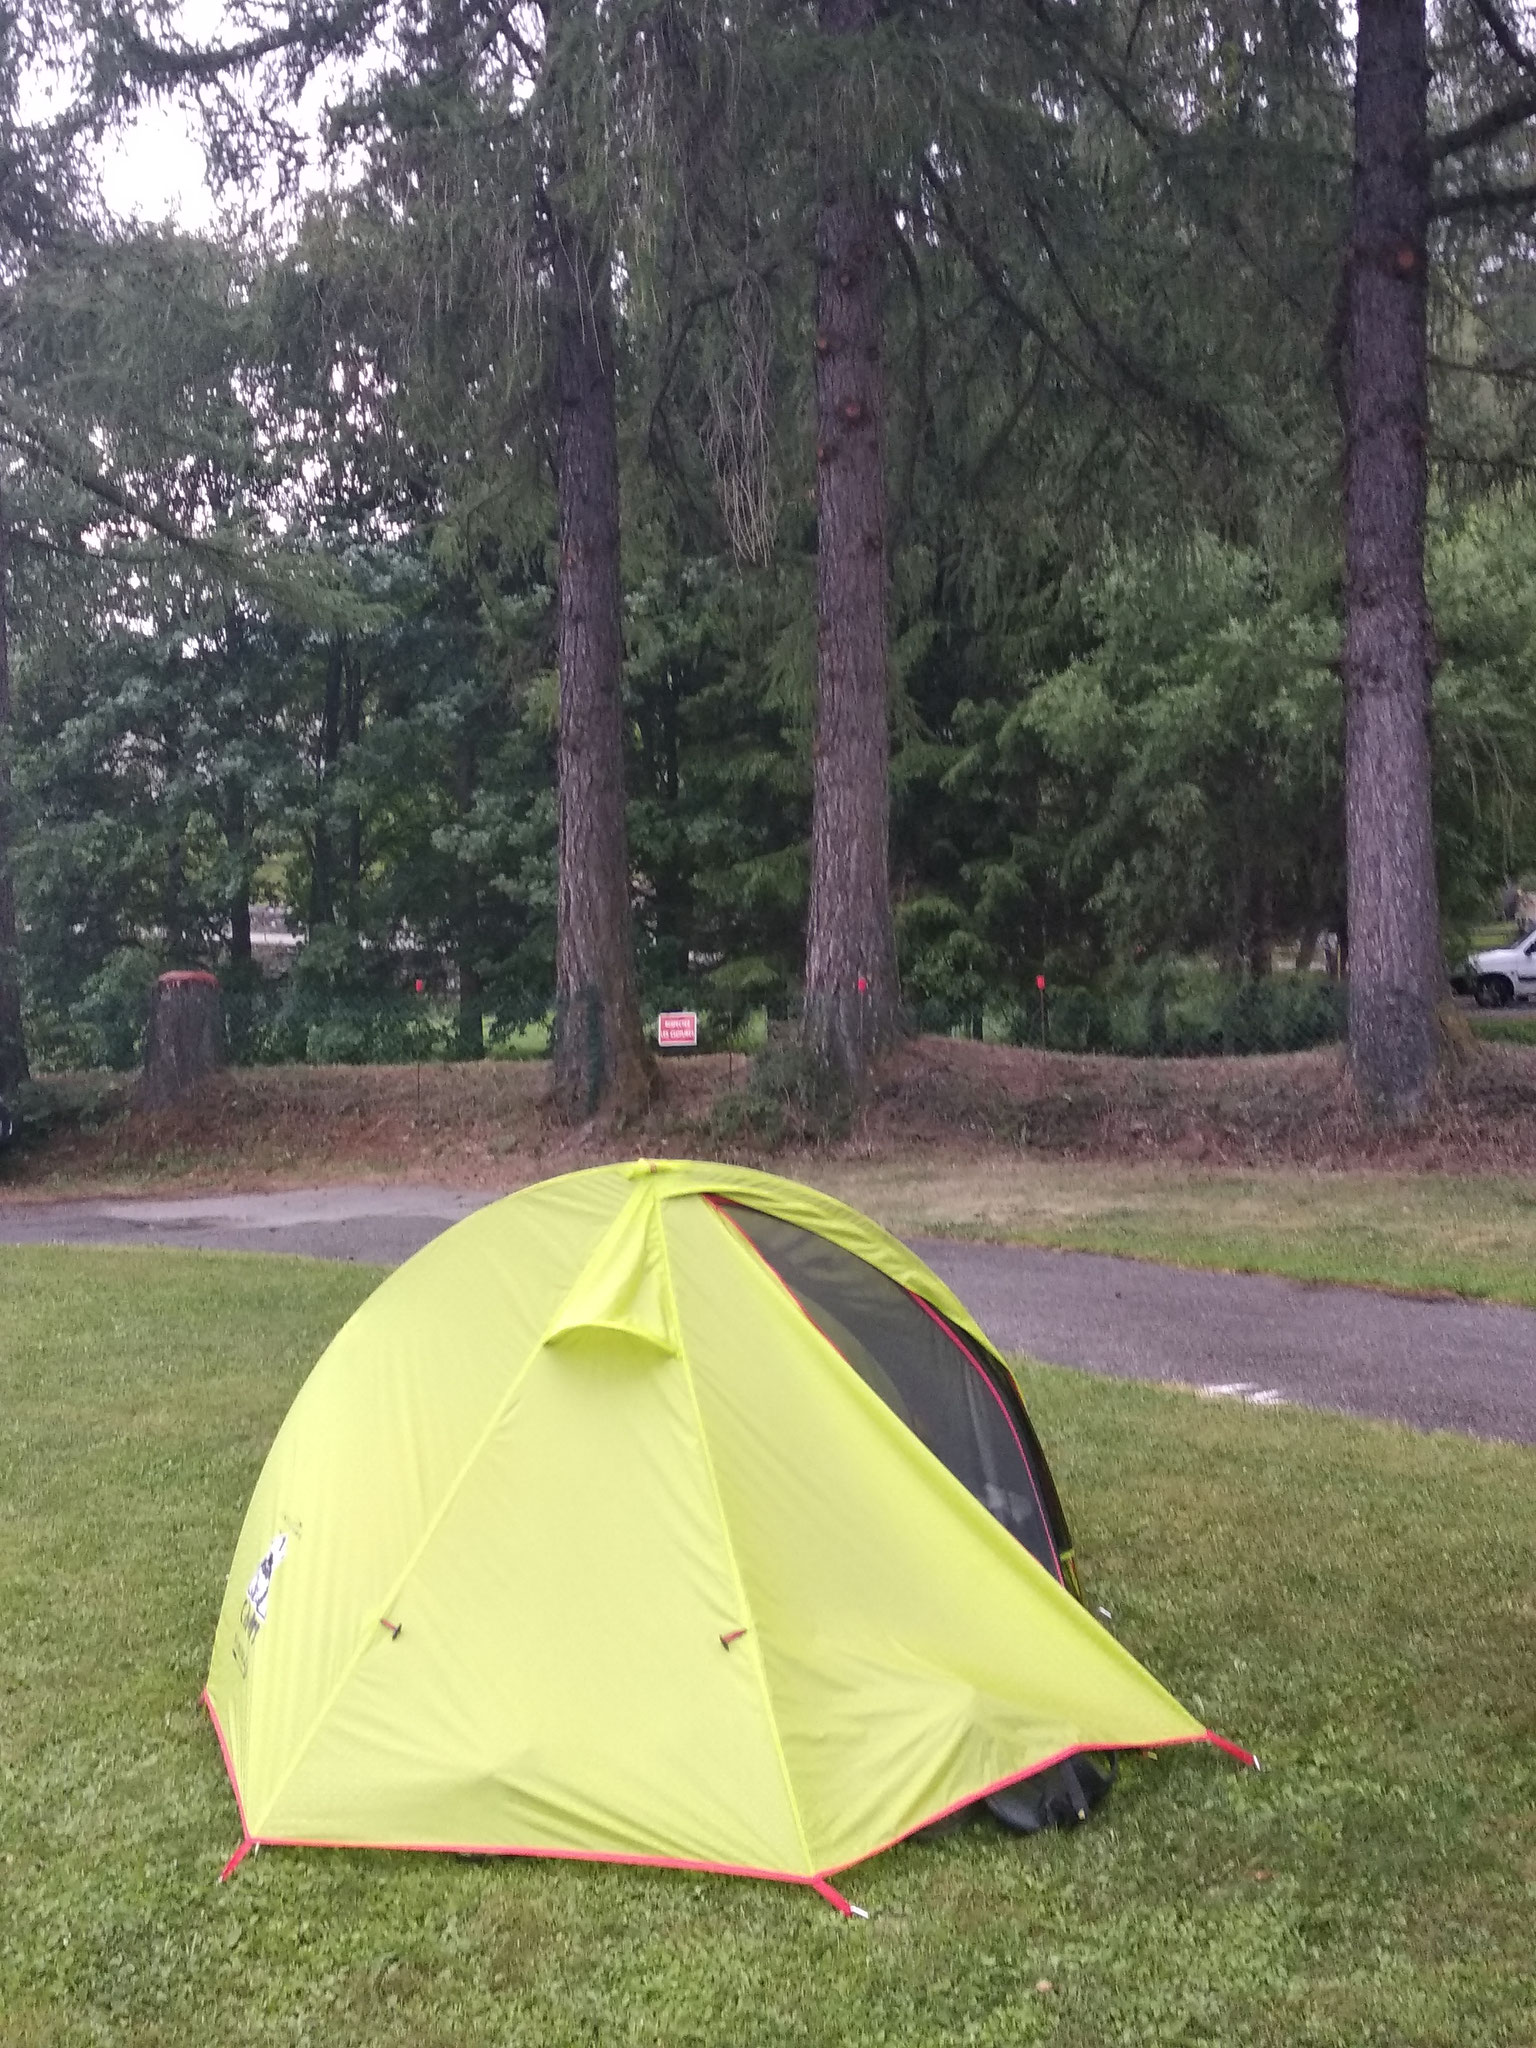 Notre tente au camping 